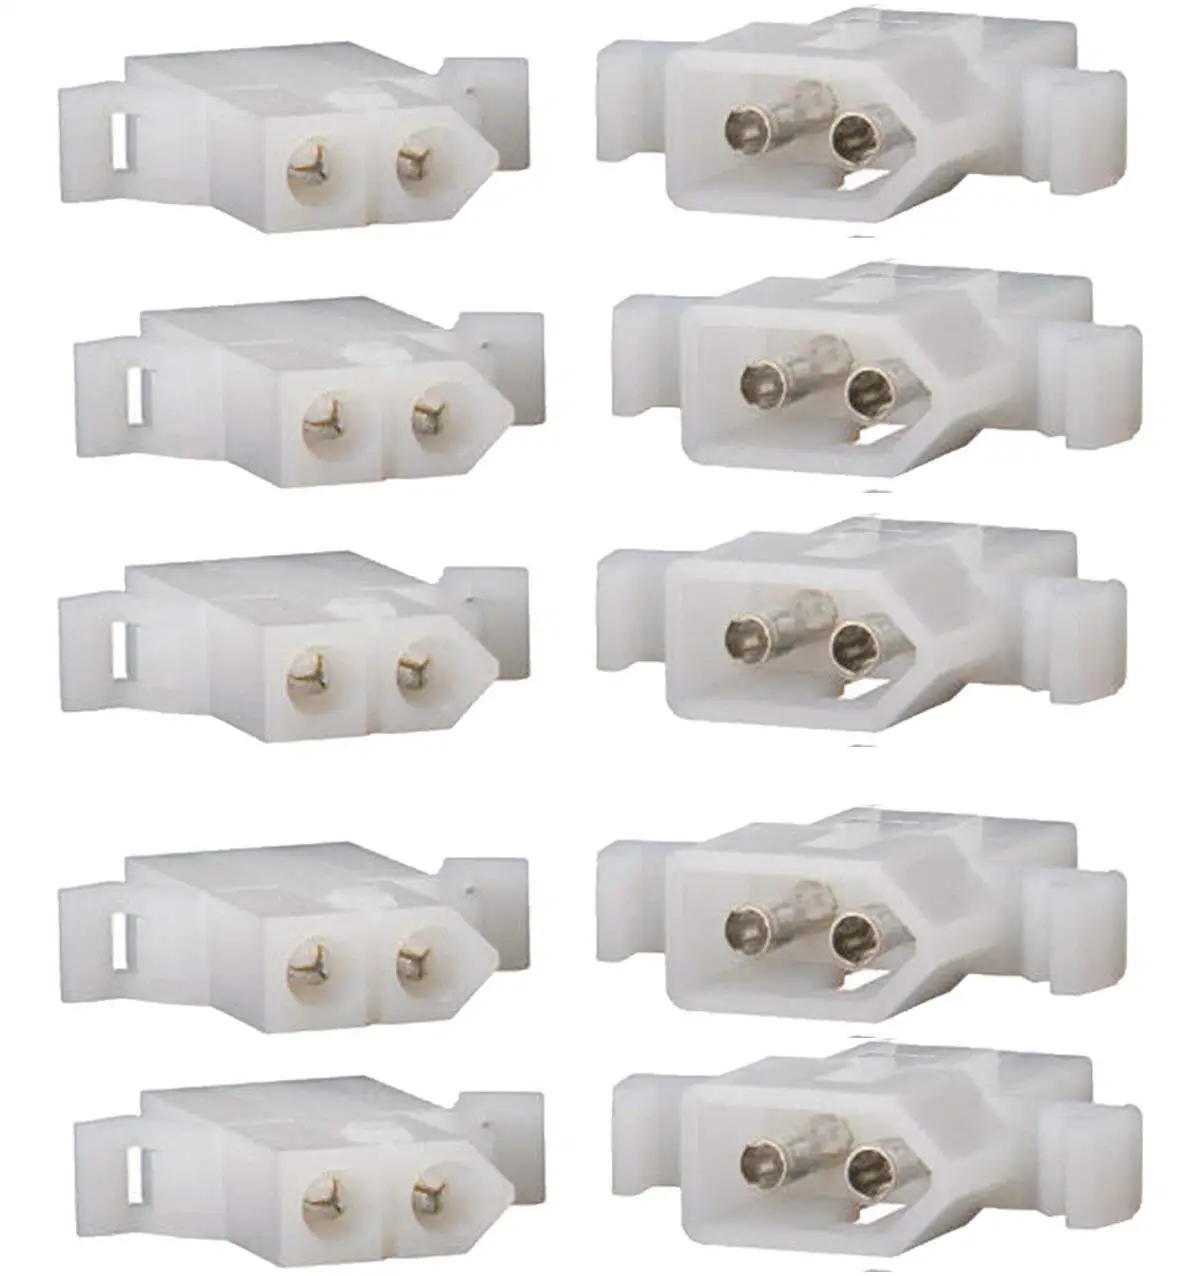 4 pin molex power connector